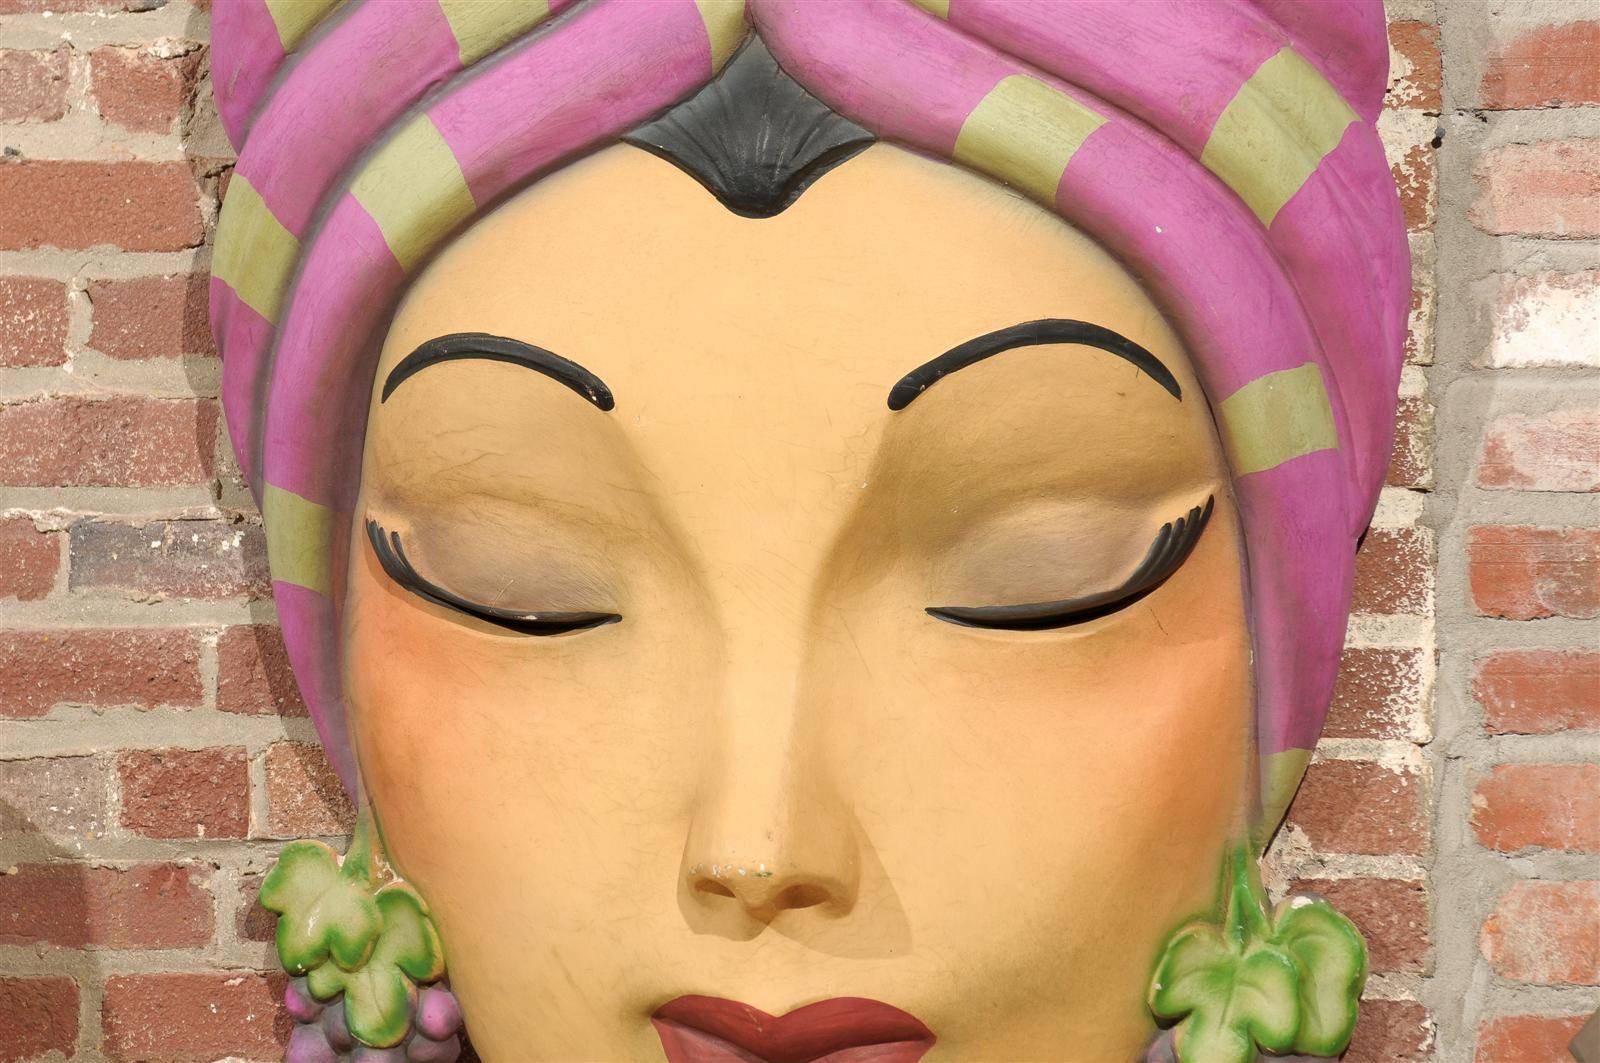 Fiberglass Large Carmen Miranda Inspired Art Piece